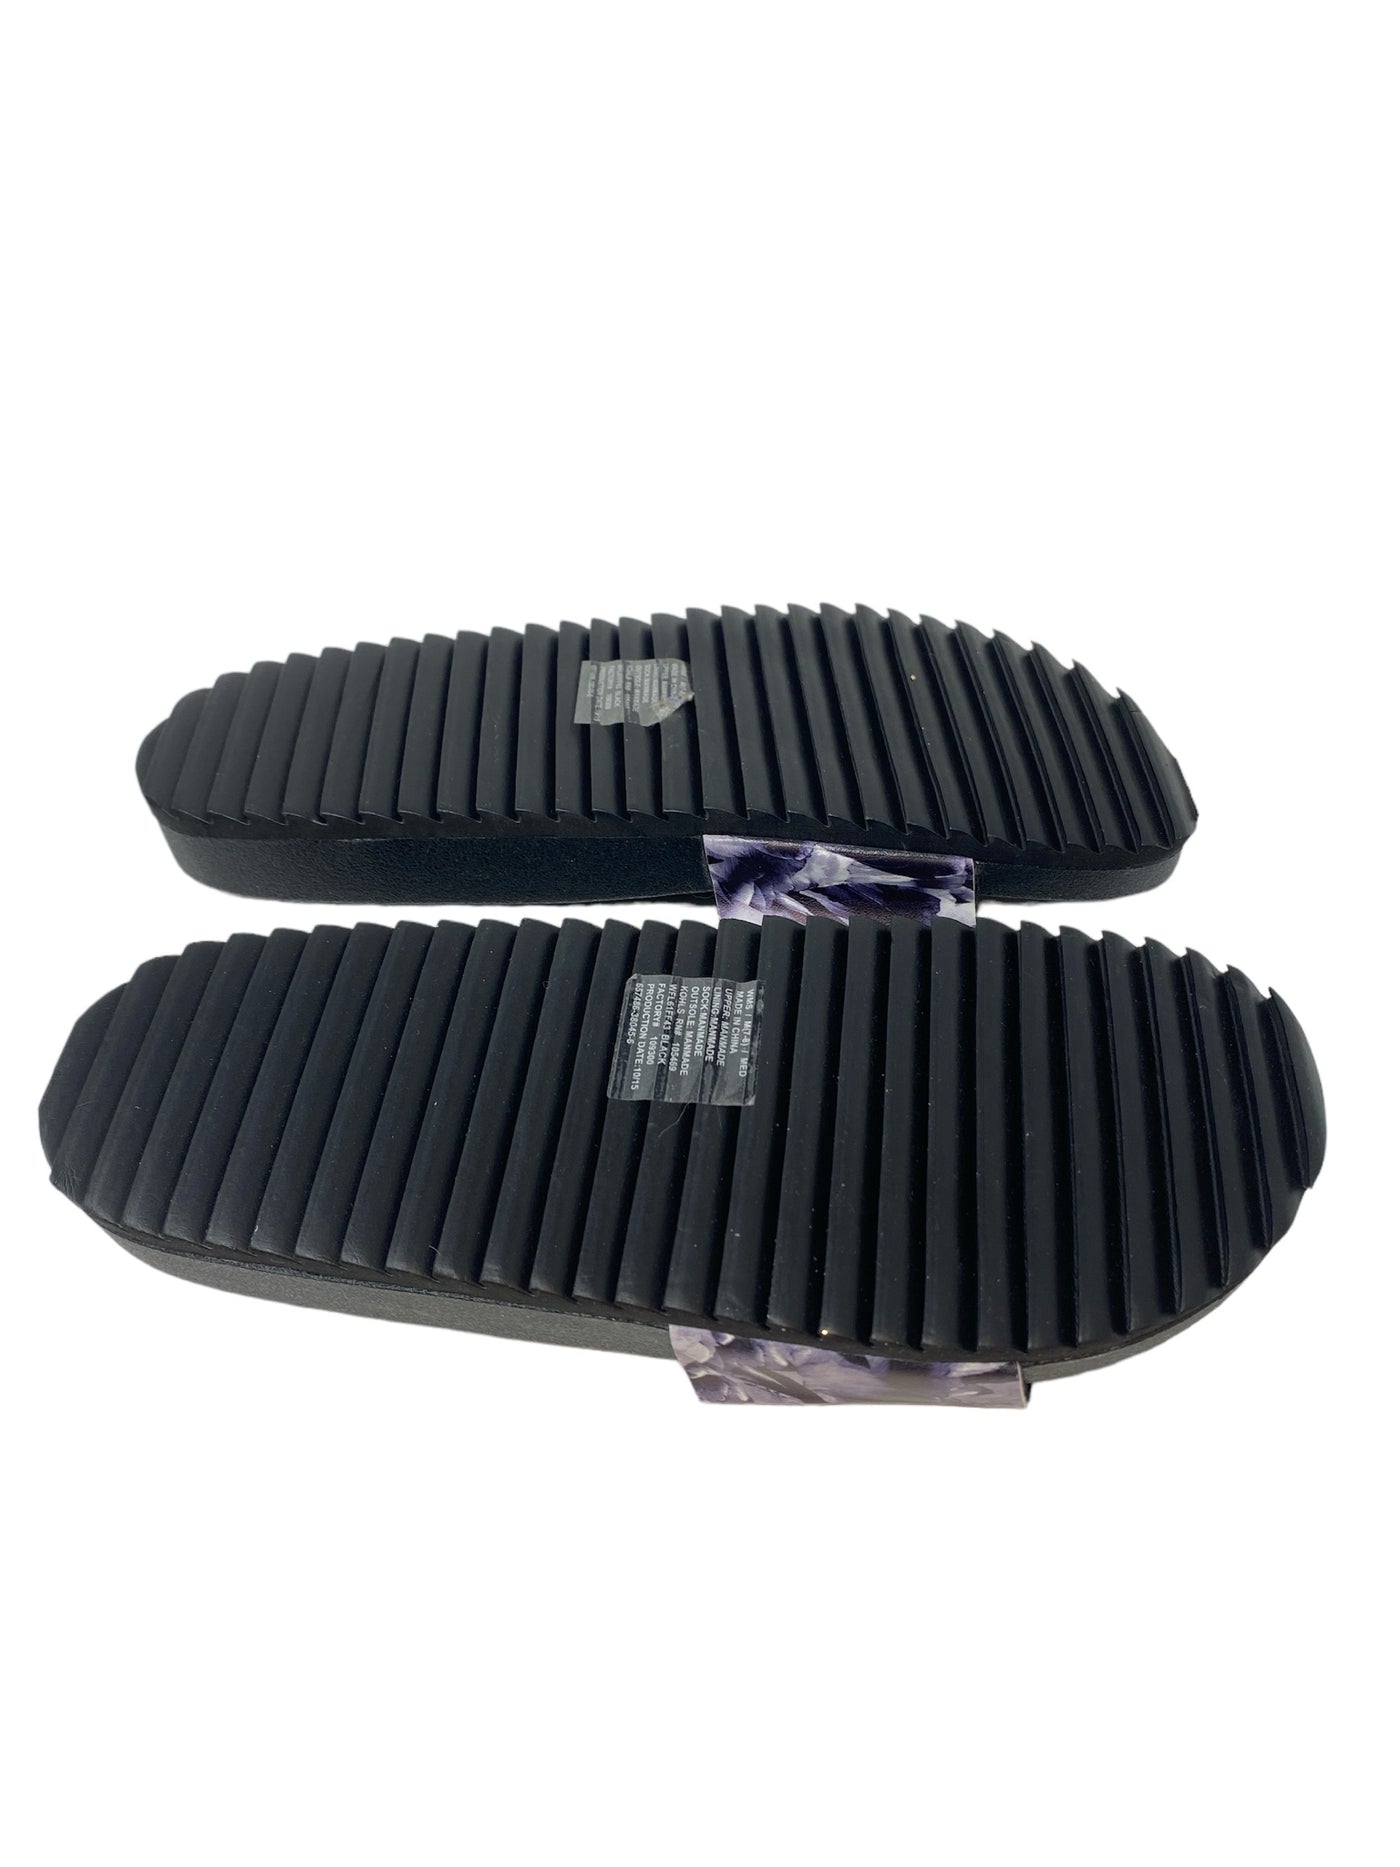 Fila Women Size 7/8 Black Print Sandals